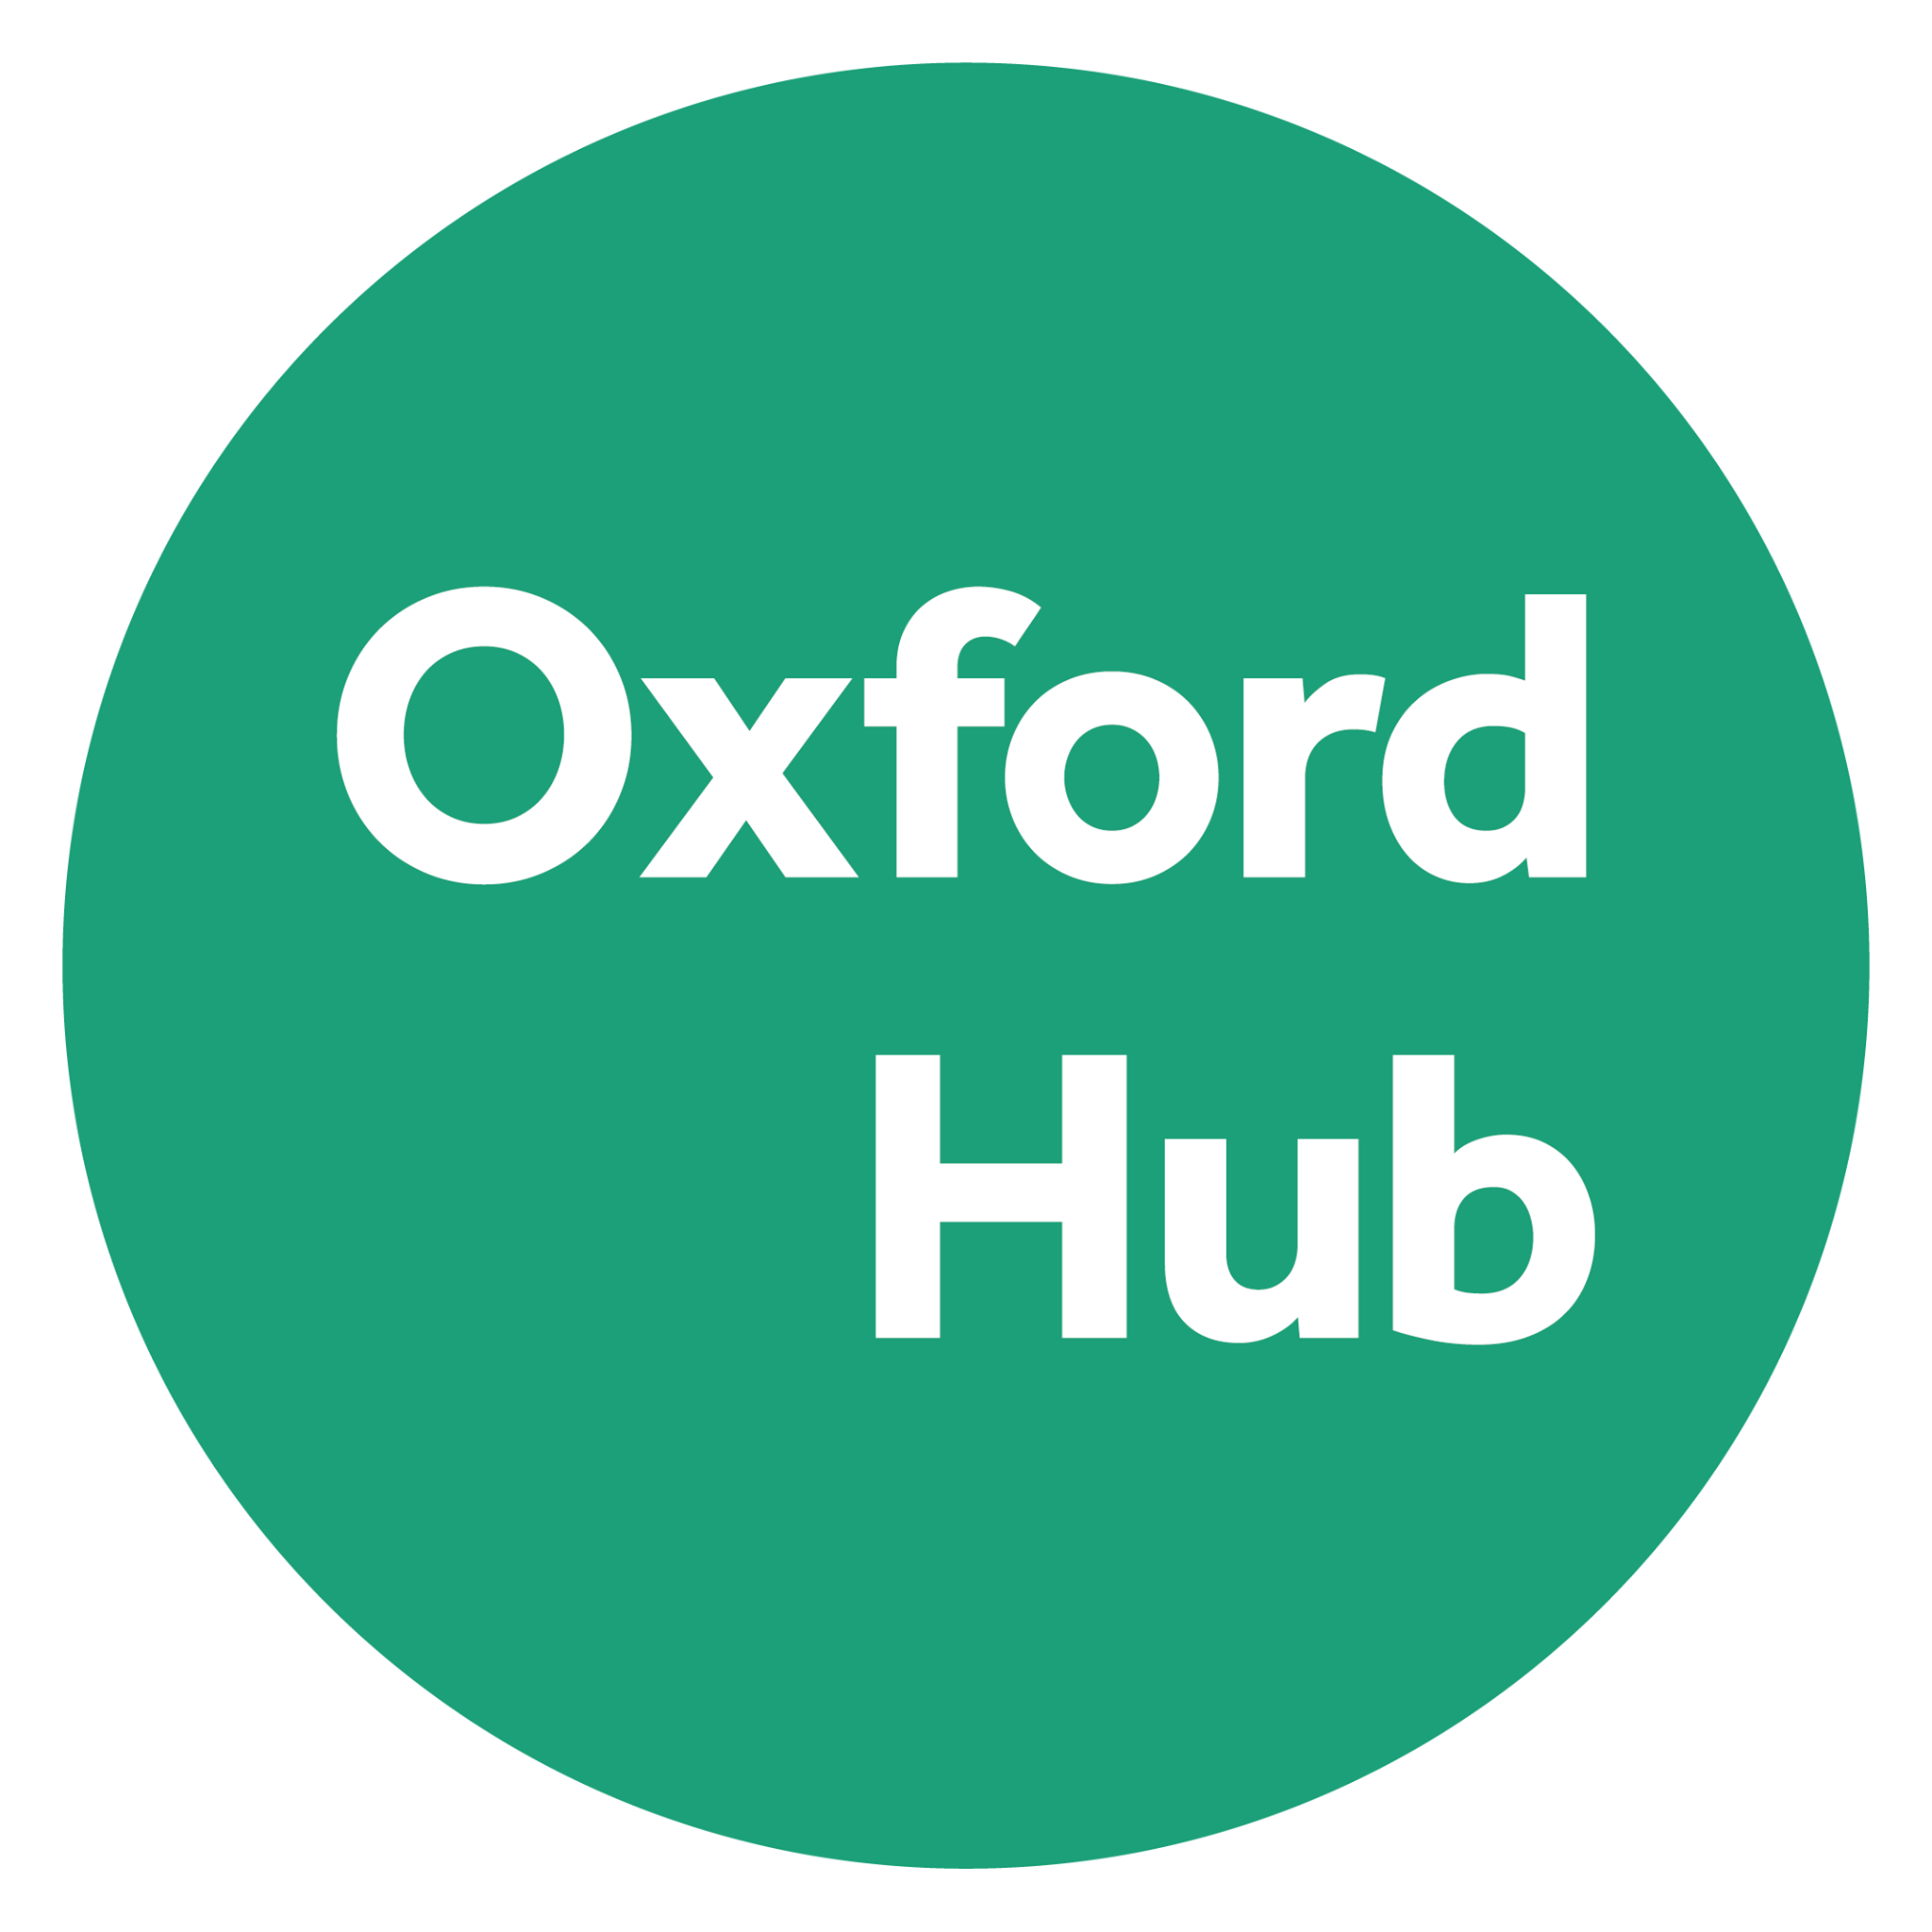 Oxford Hub Logo